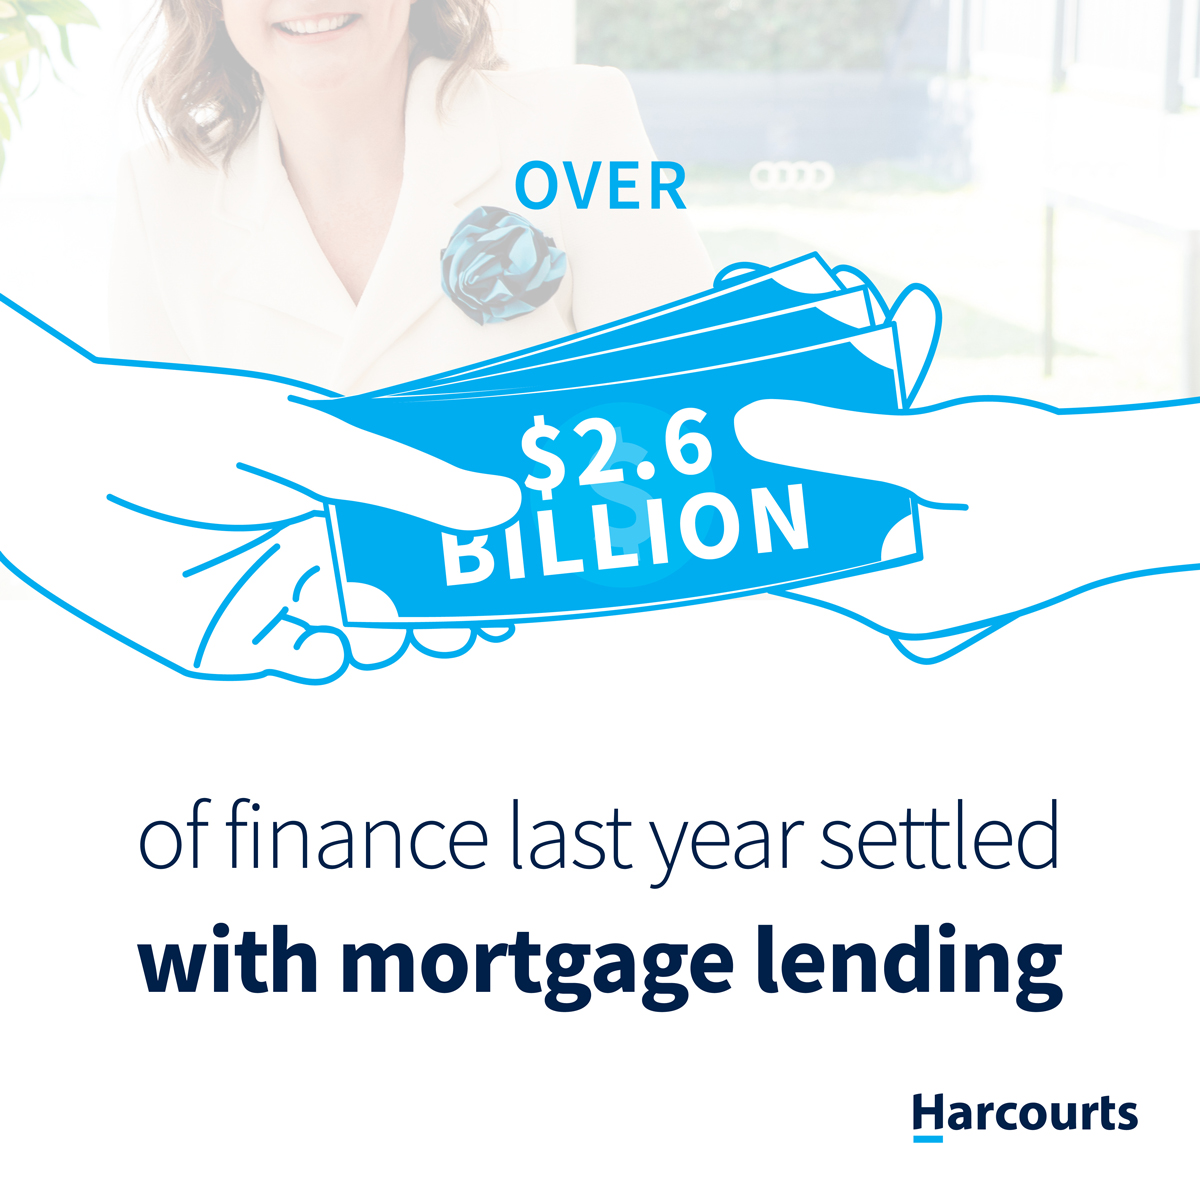 Over 2.6 Billion dollars of finance last year settled with mortgage lending.